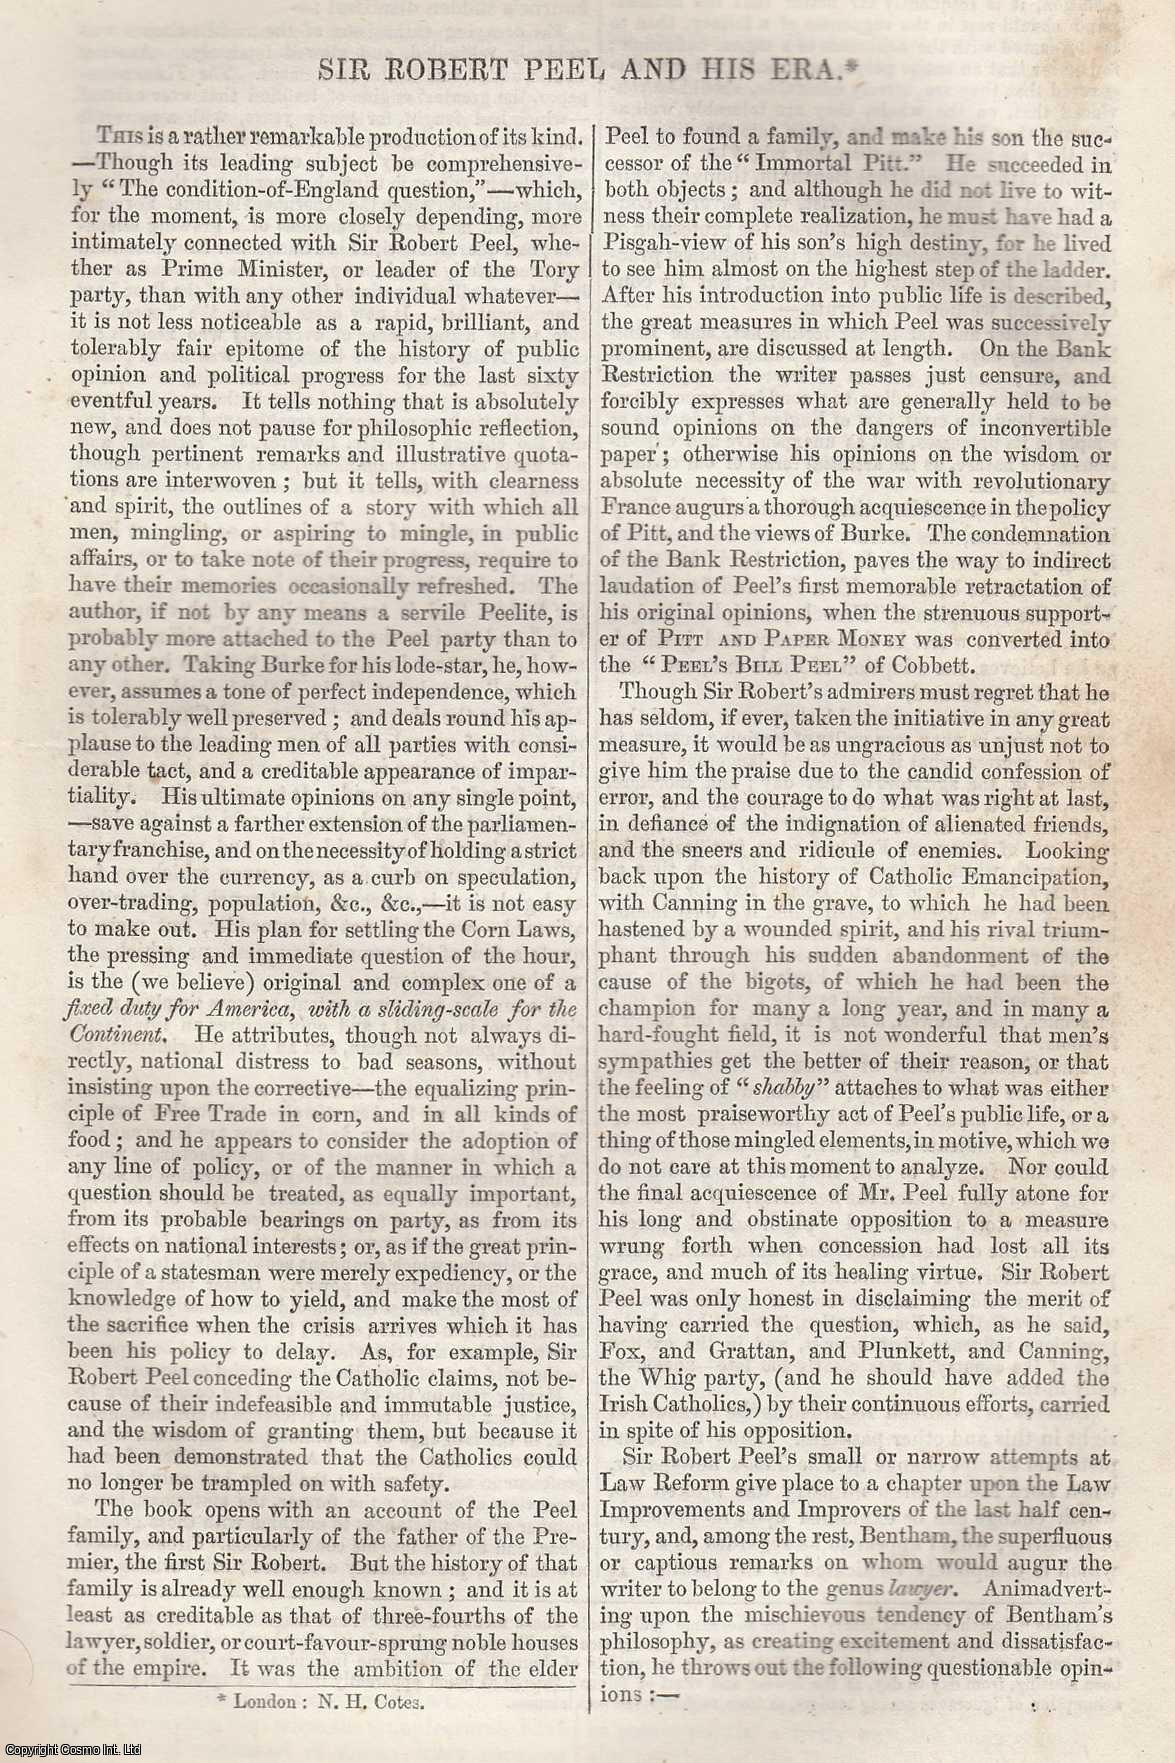 Johnstone, Christian - Sir Robert Peel and His Era. An original article from Tait's Edinburgh Magazine, 1843.